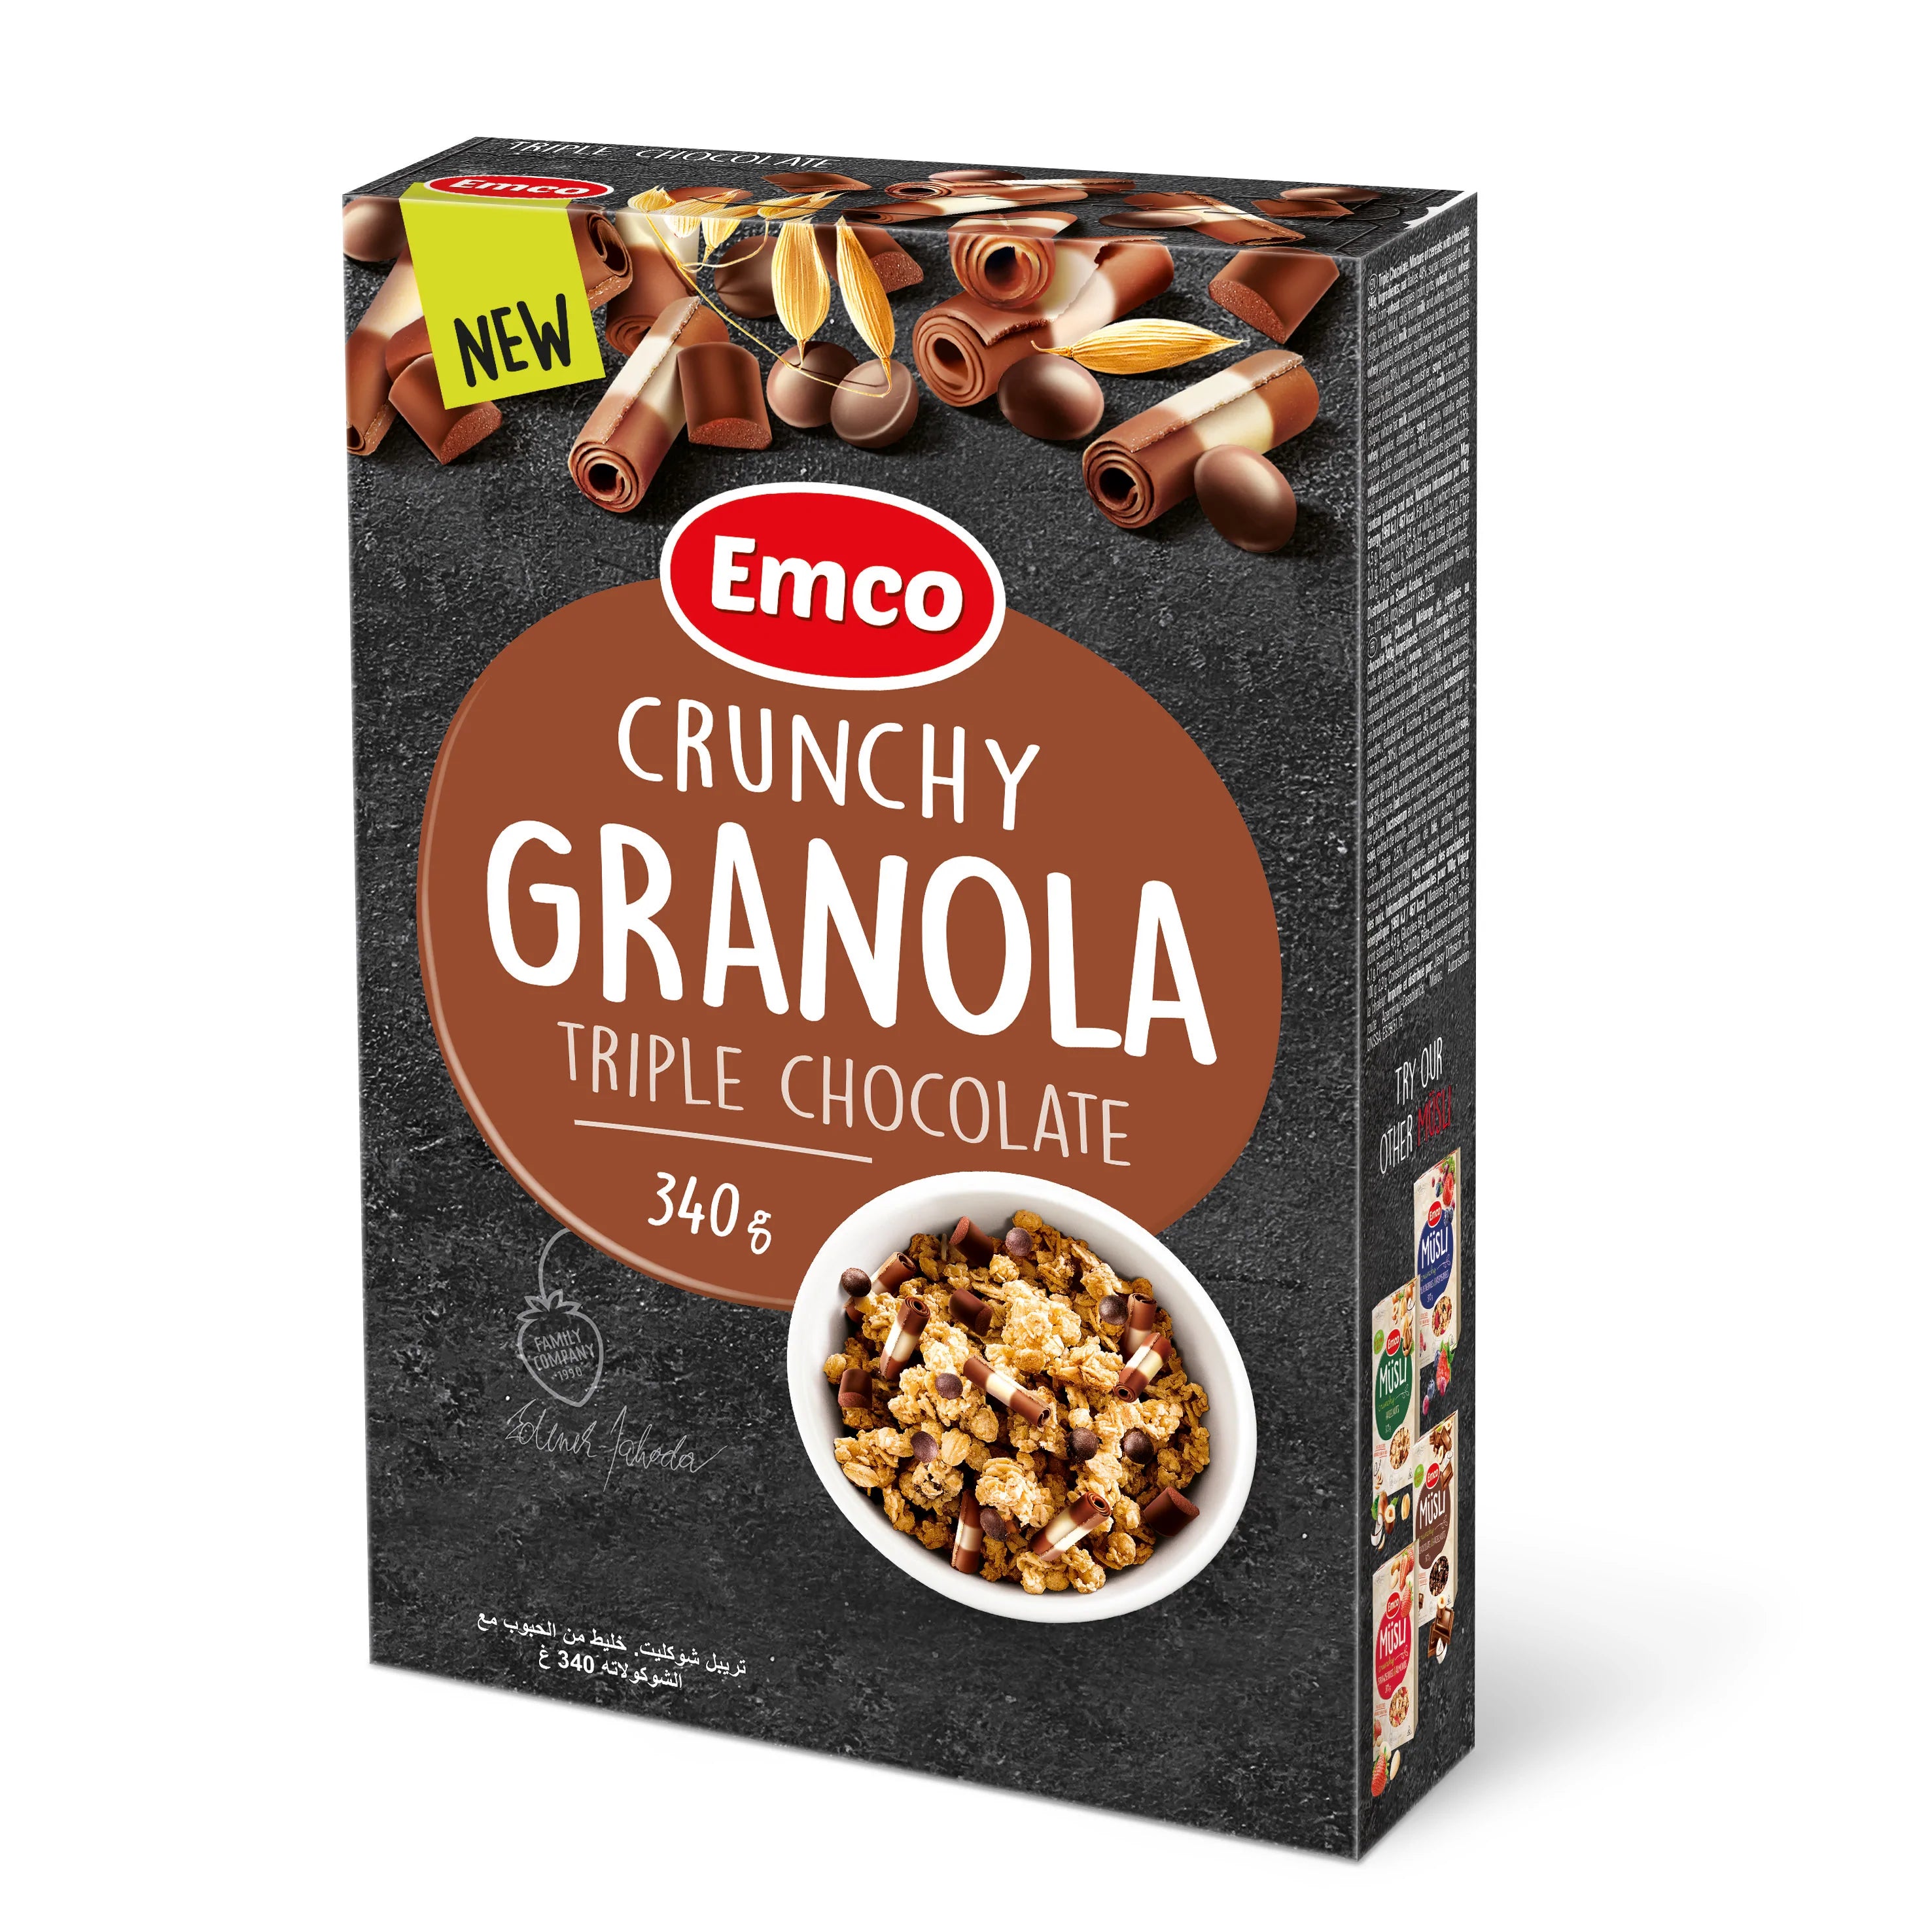 EMCO Crunchy Granola Triple Chocolate, 340g